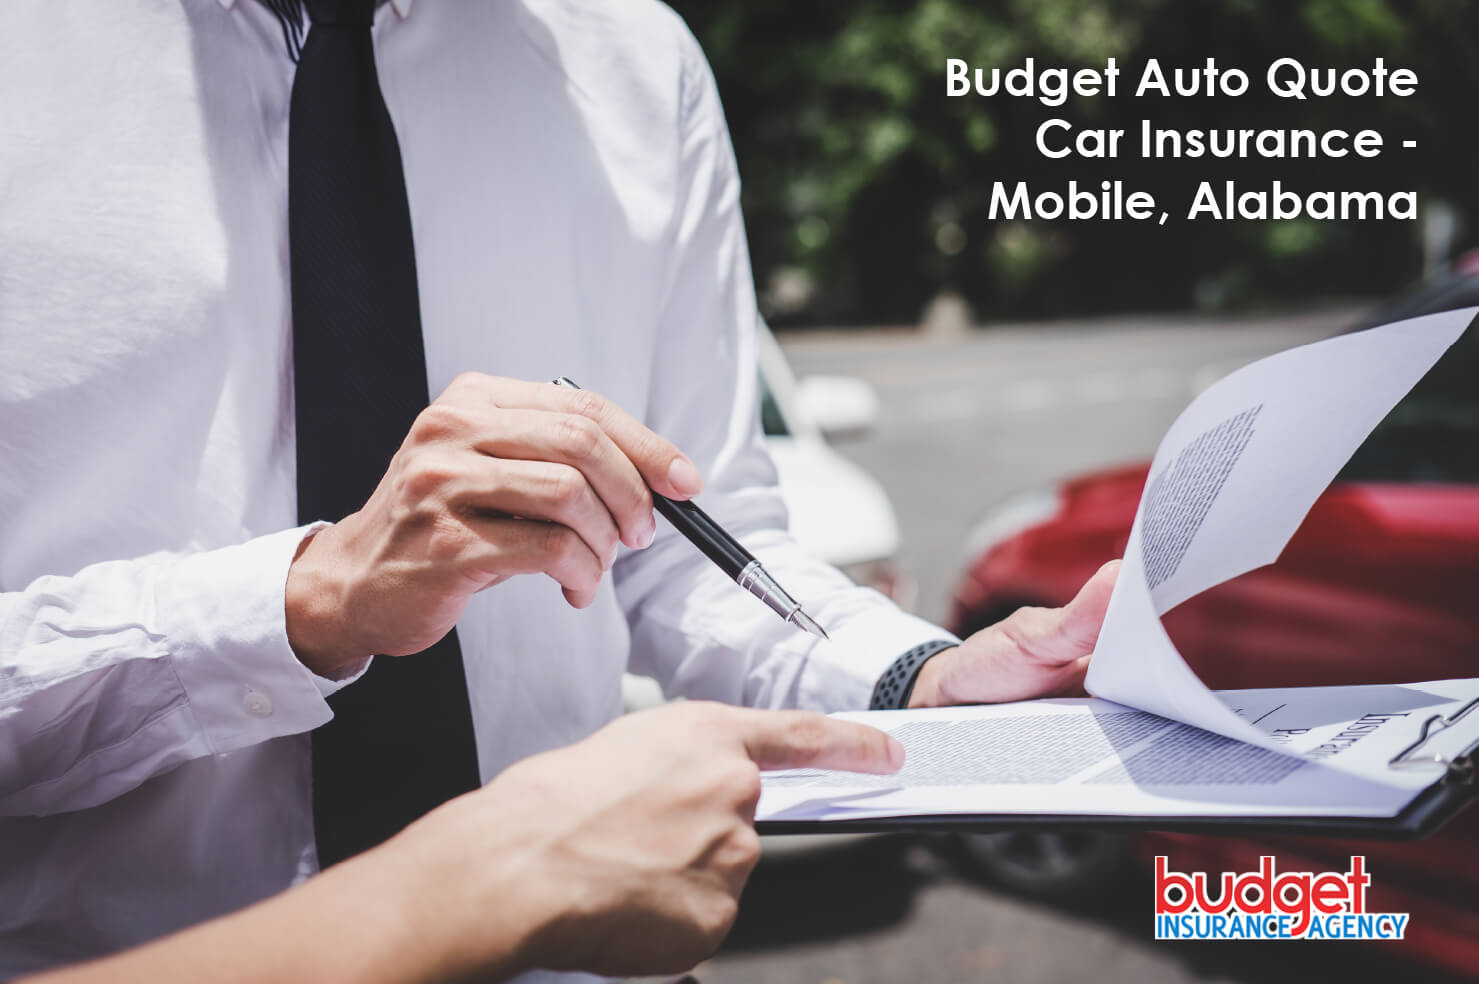 Budget Auto Quote Car Insurance - Mobile, Alabama